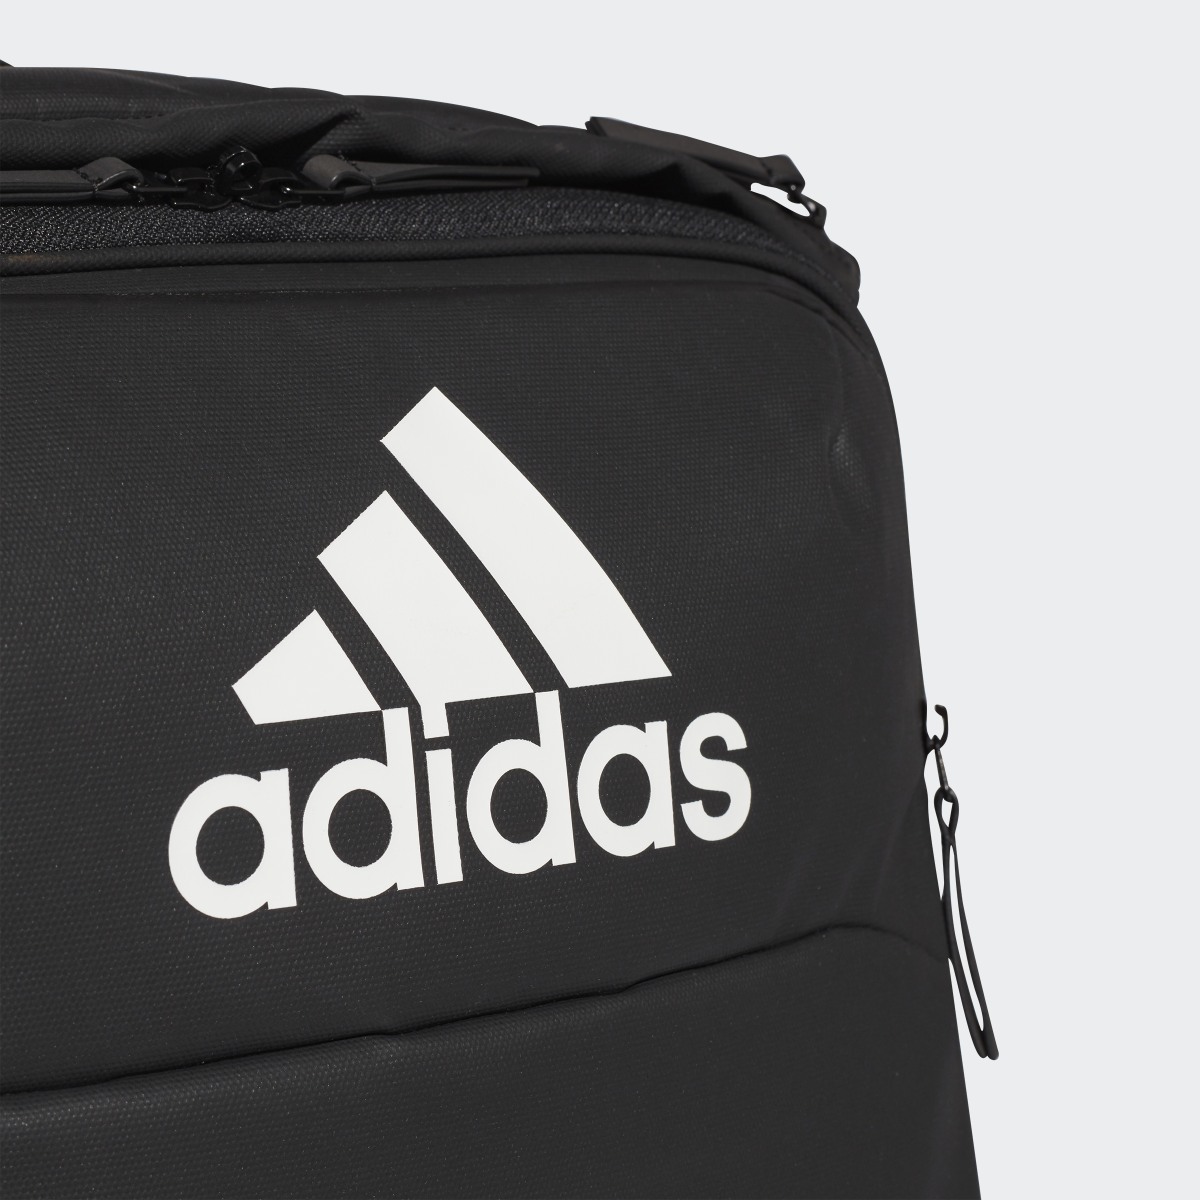 Adidas Roller Bag Small. 6